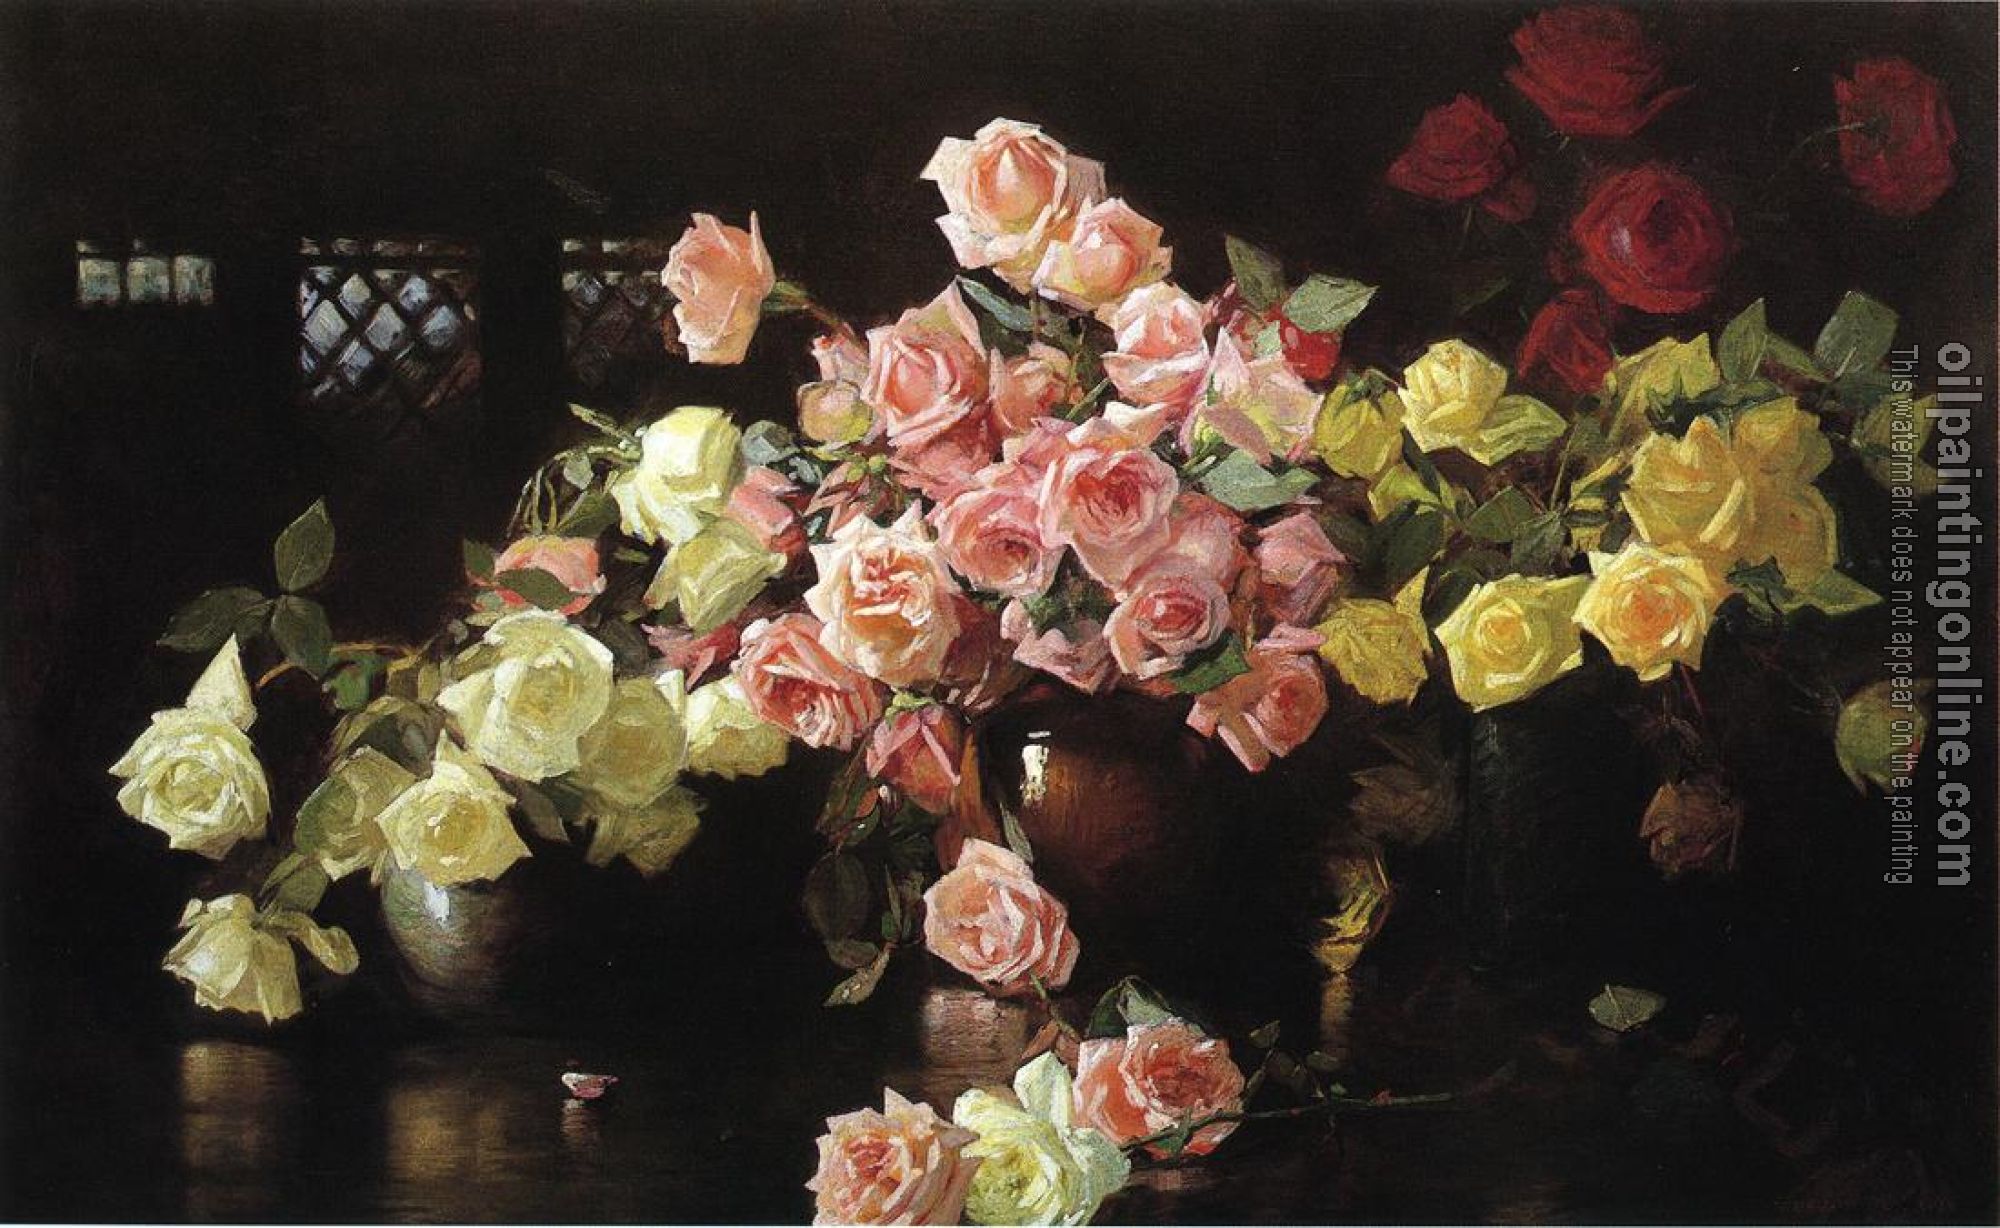 Joseph R DeCamp - Roses